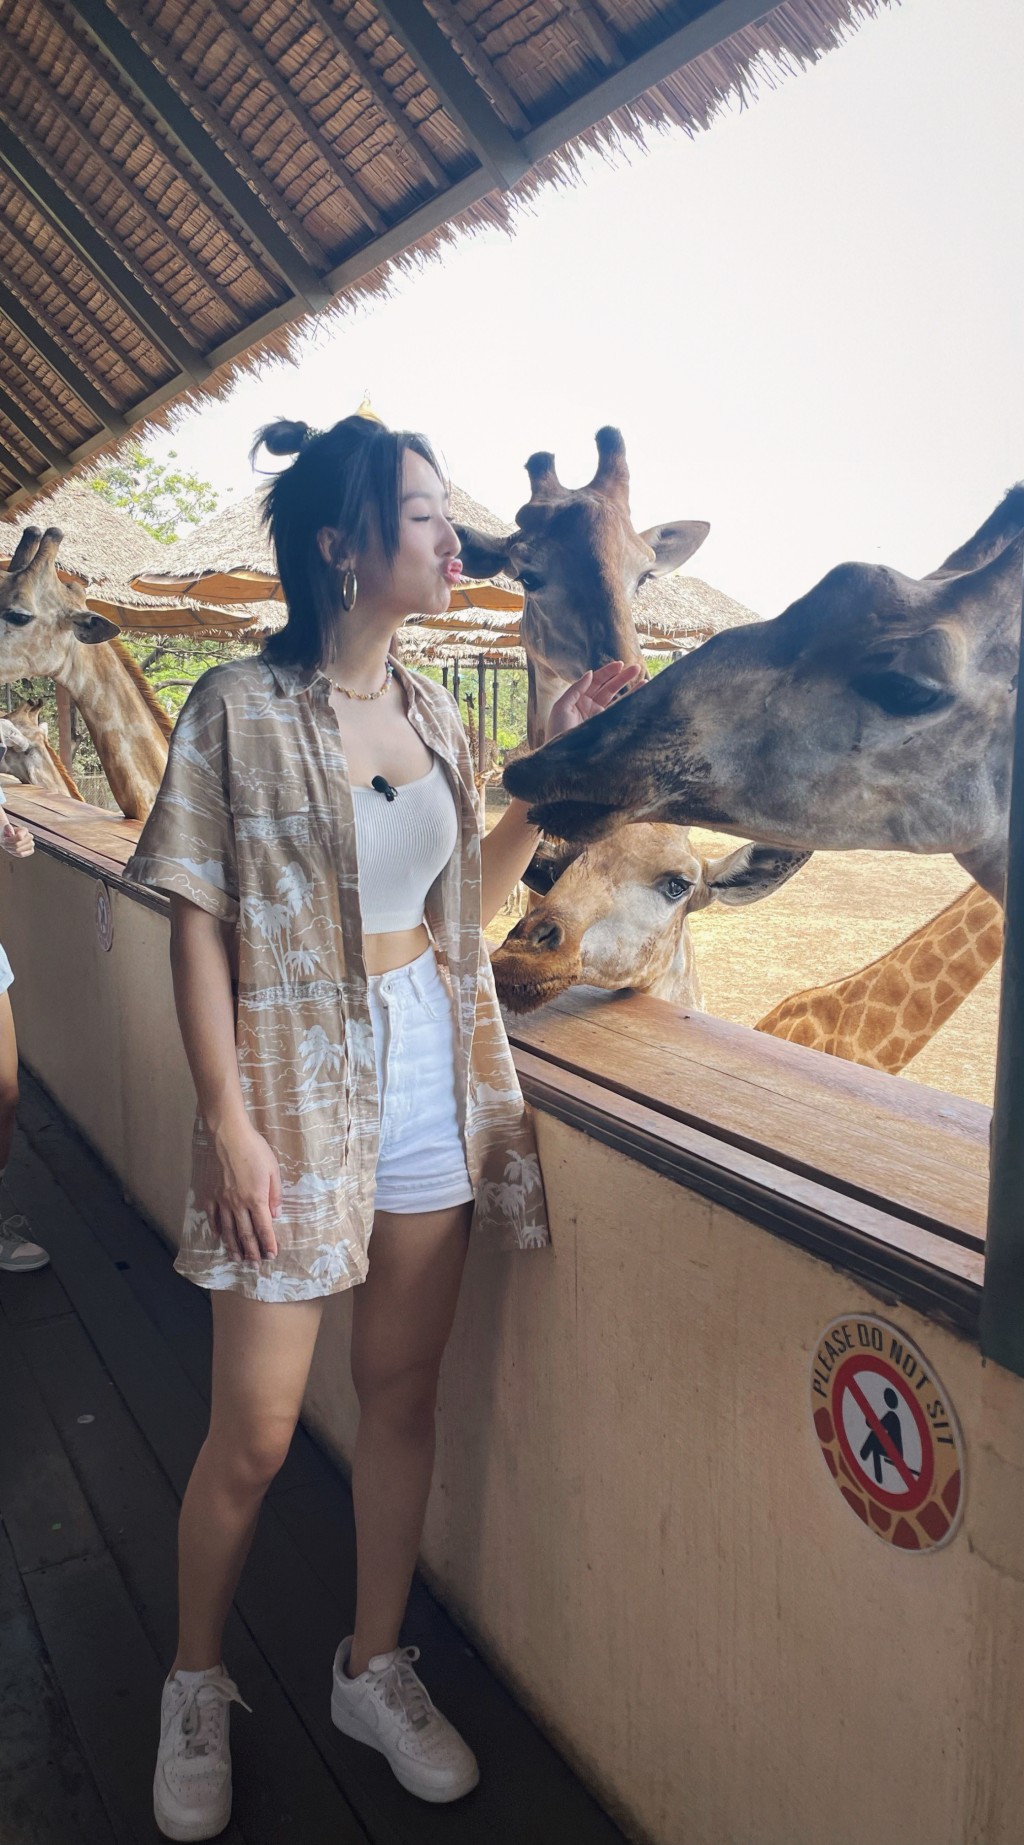 高 Ling 大赞曼谷 Safari World 的长颈鹿平易近人。